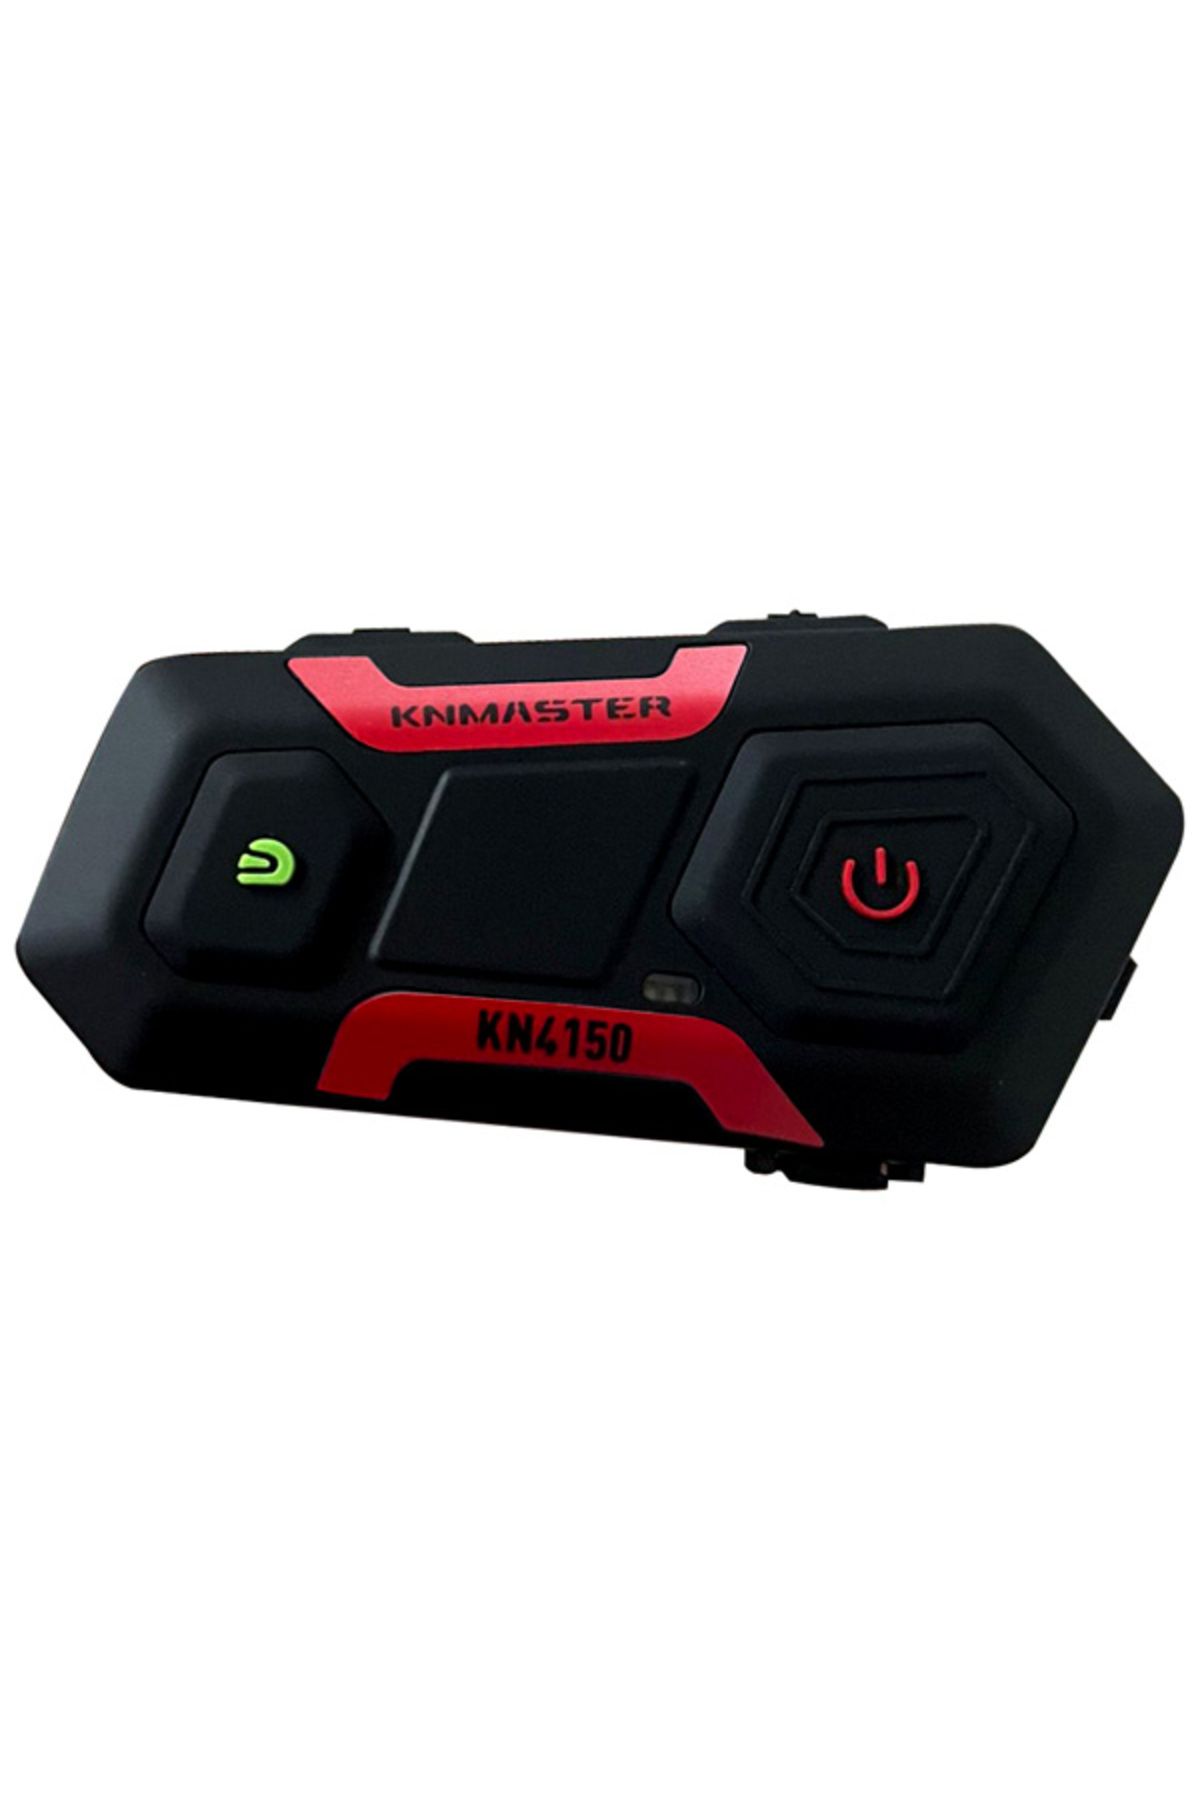 Knmaster Kn4150 Motosiklet Kask Interkom Bluetooth Intercom Kulaklık Seti Kırmızı